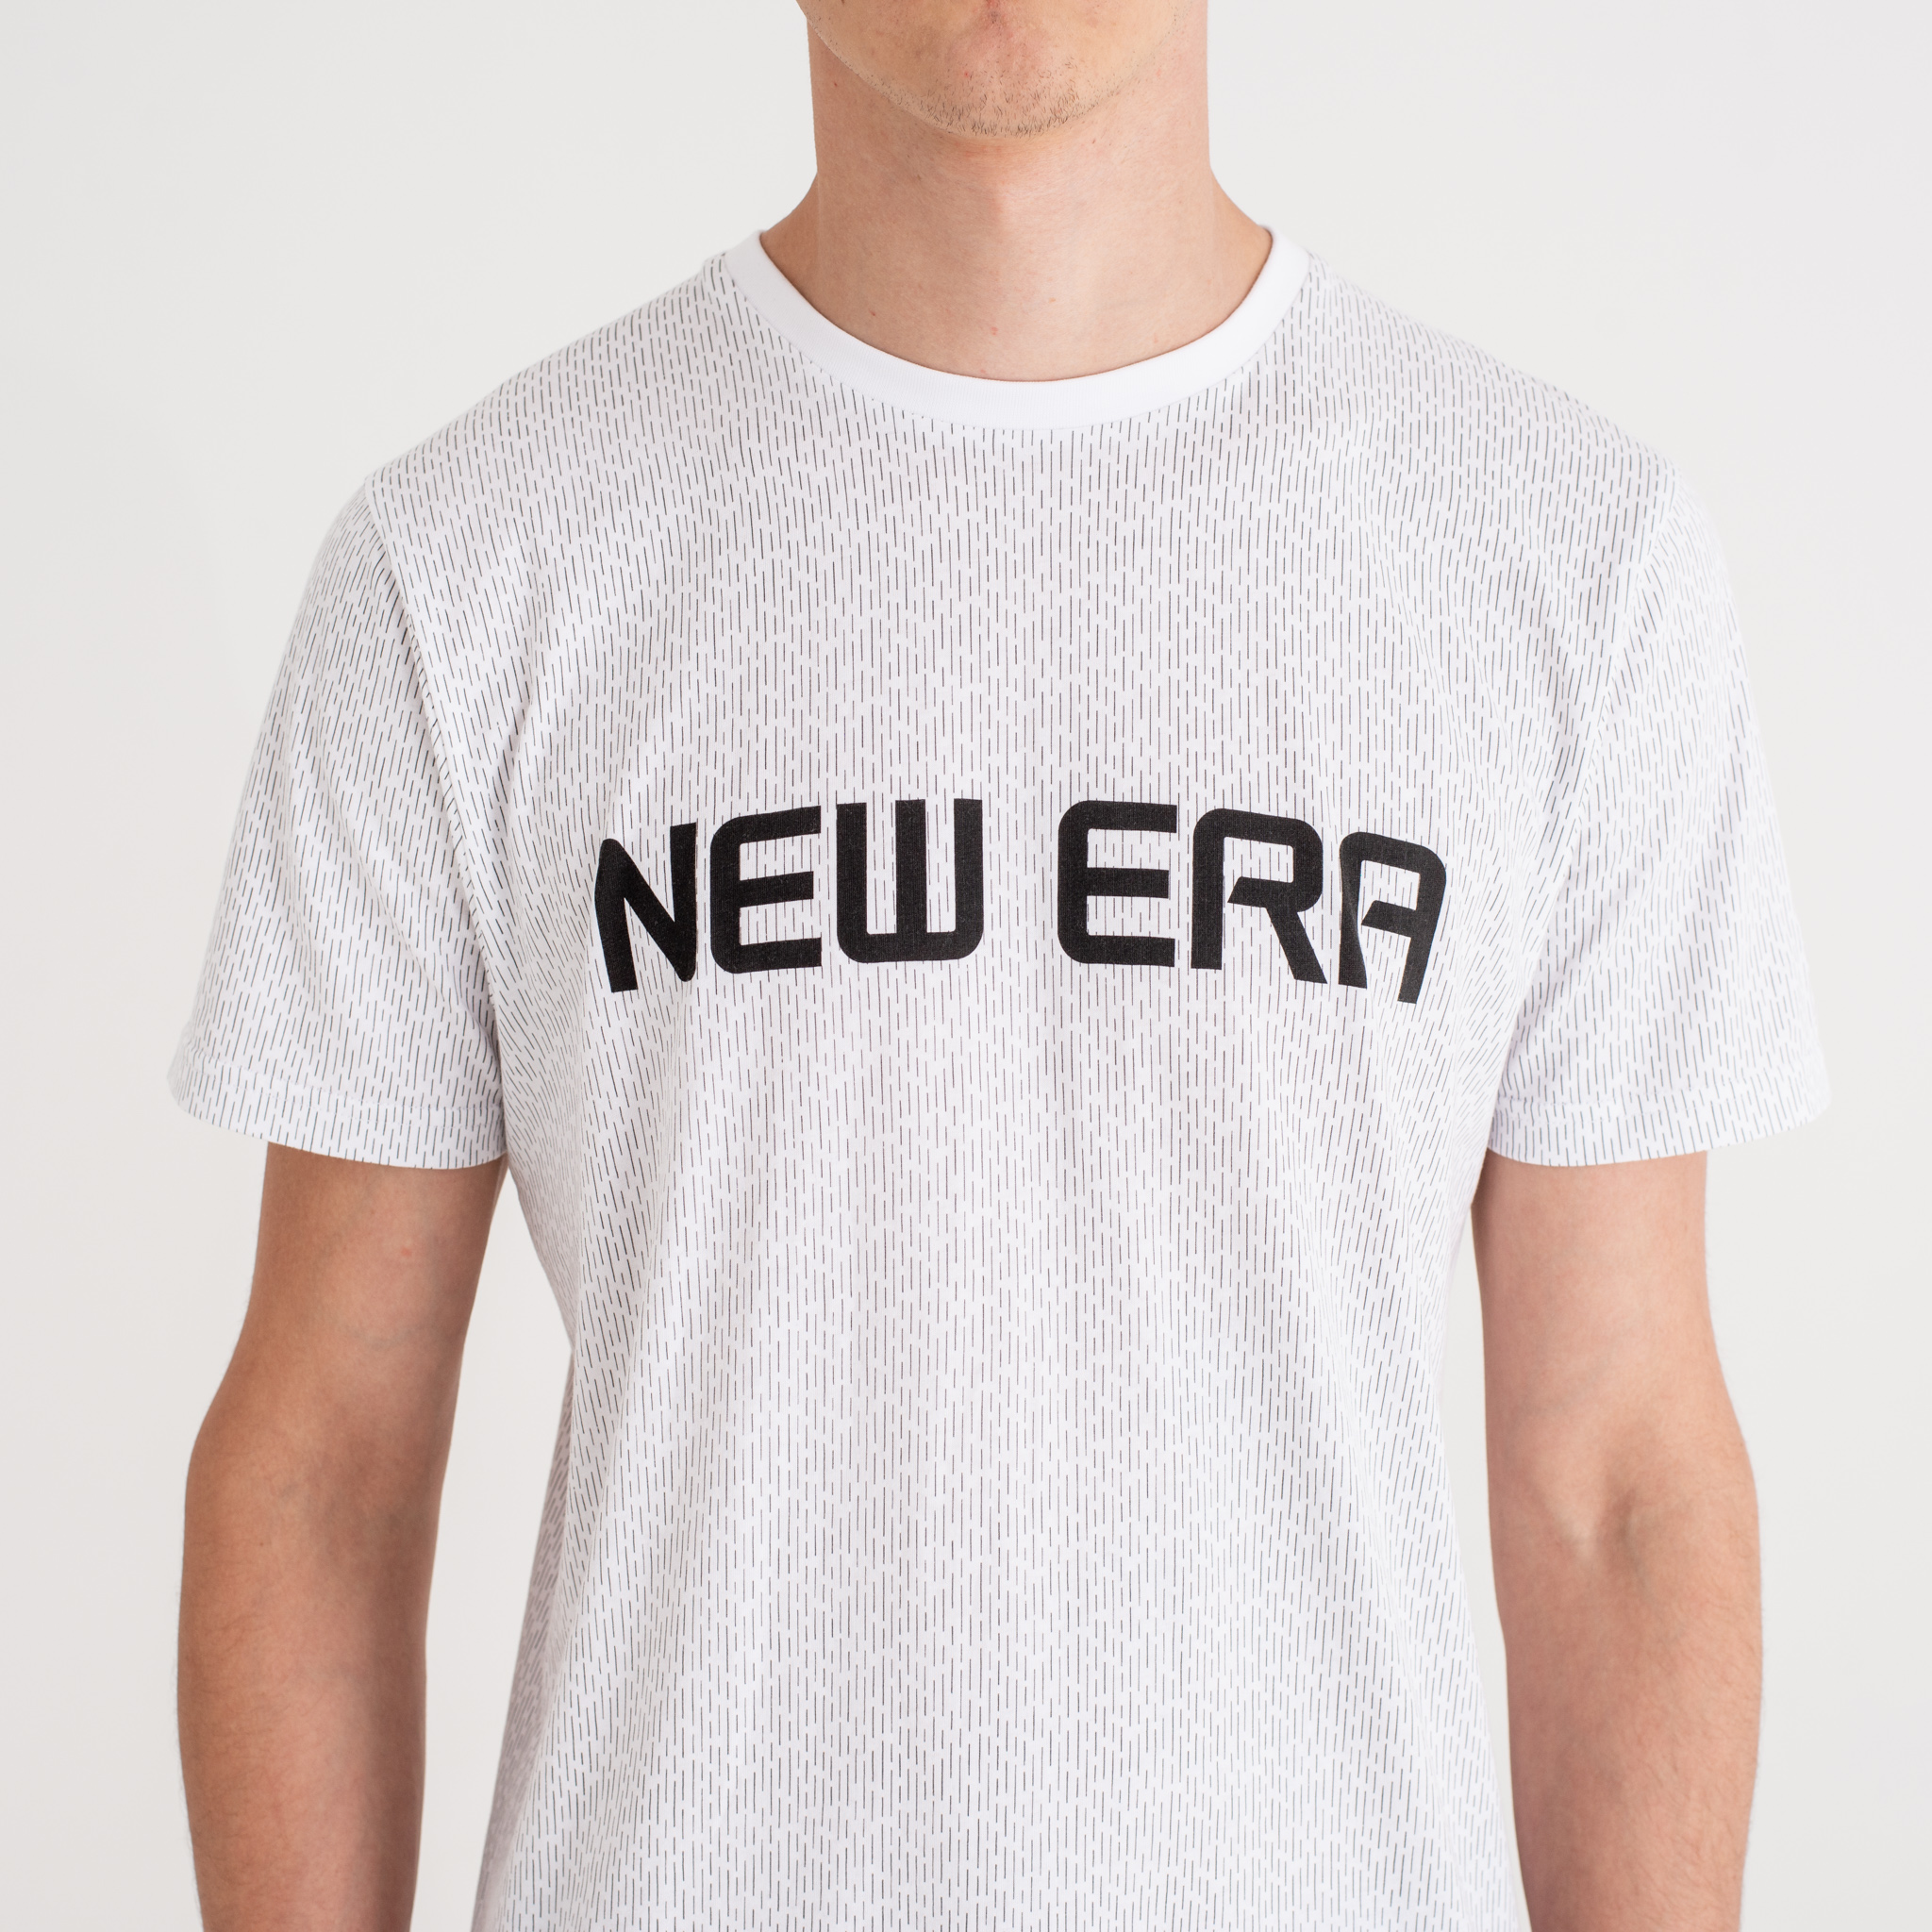 Camiseta New Era Rain Camo, blanco